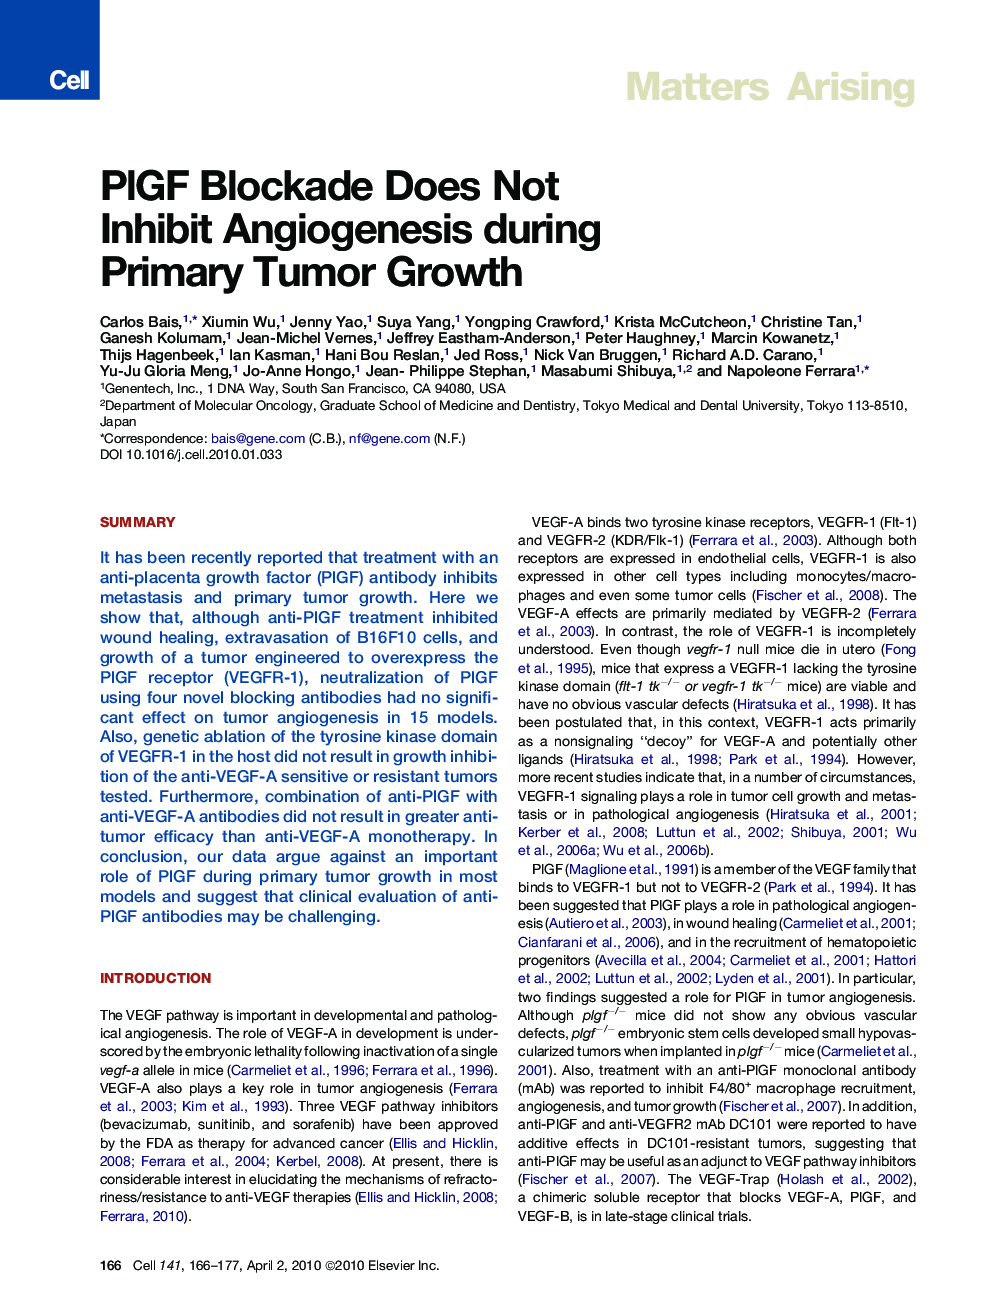 PlGF Blockade Does Not Inhibit Angiogenesis during Primary Tumor Growth